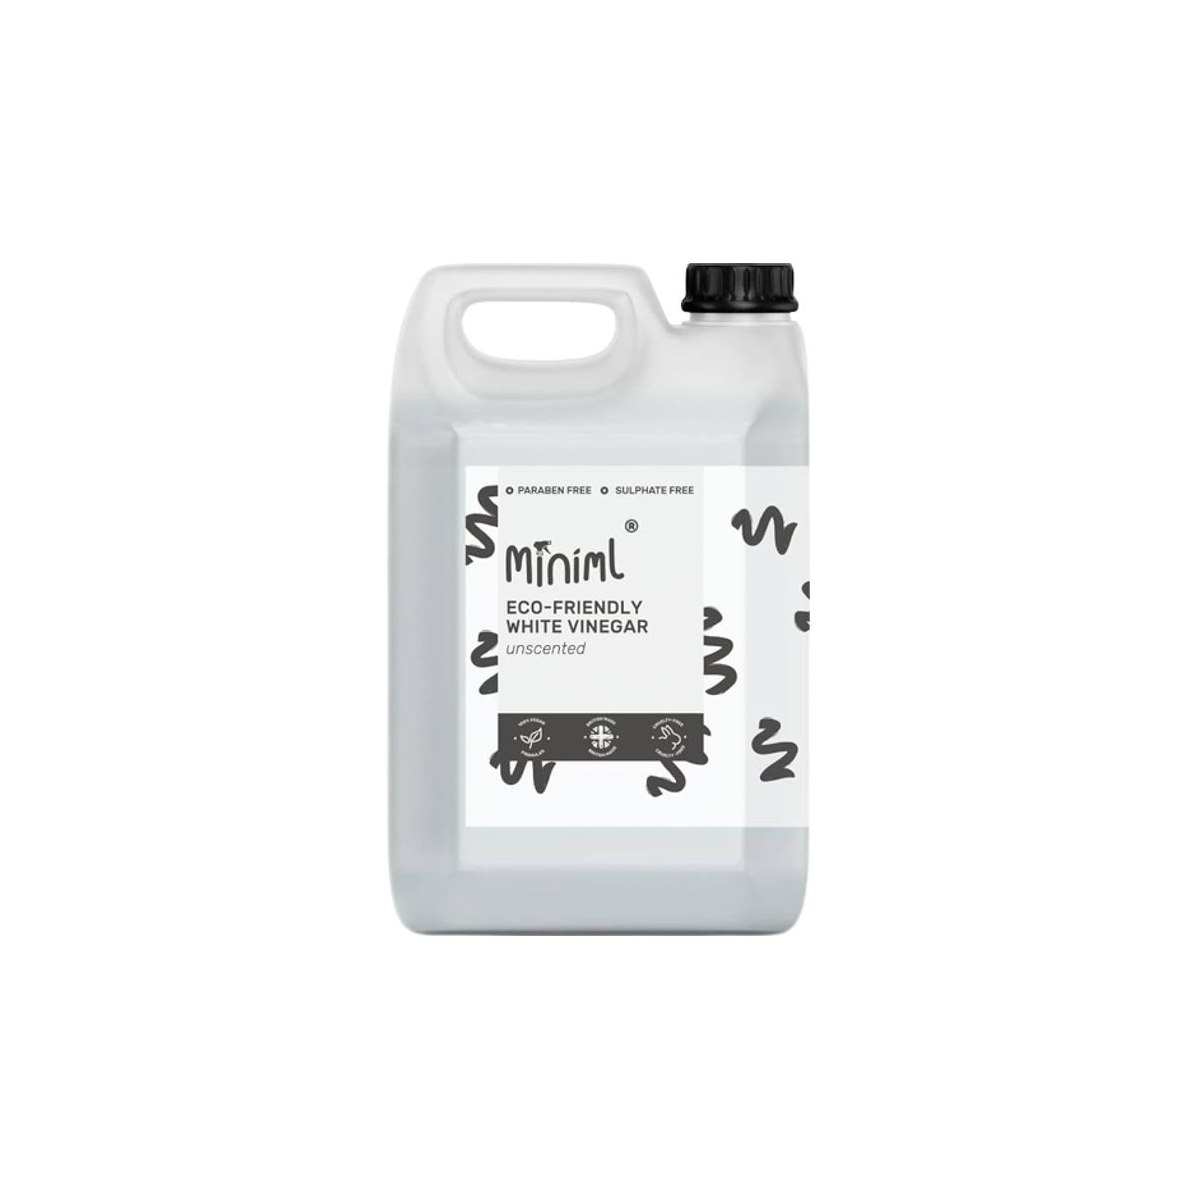 Miniml Eco Friendly White Vinegar 5L Unscented